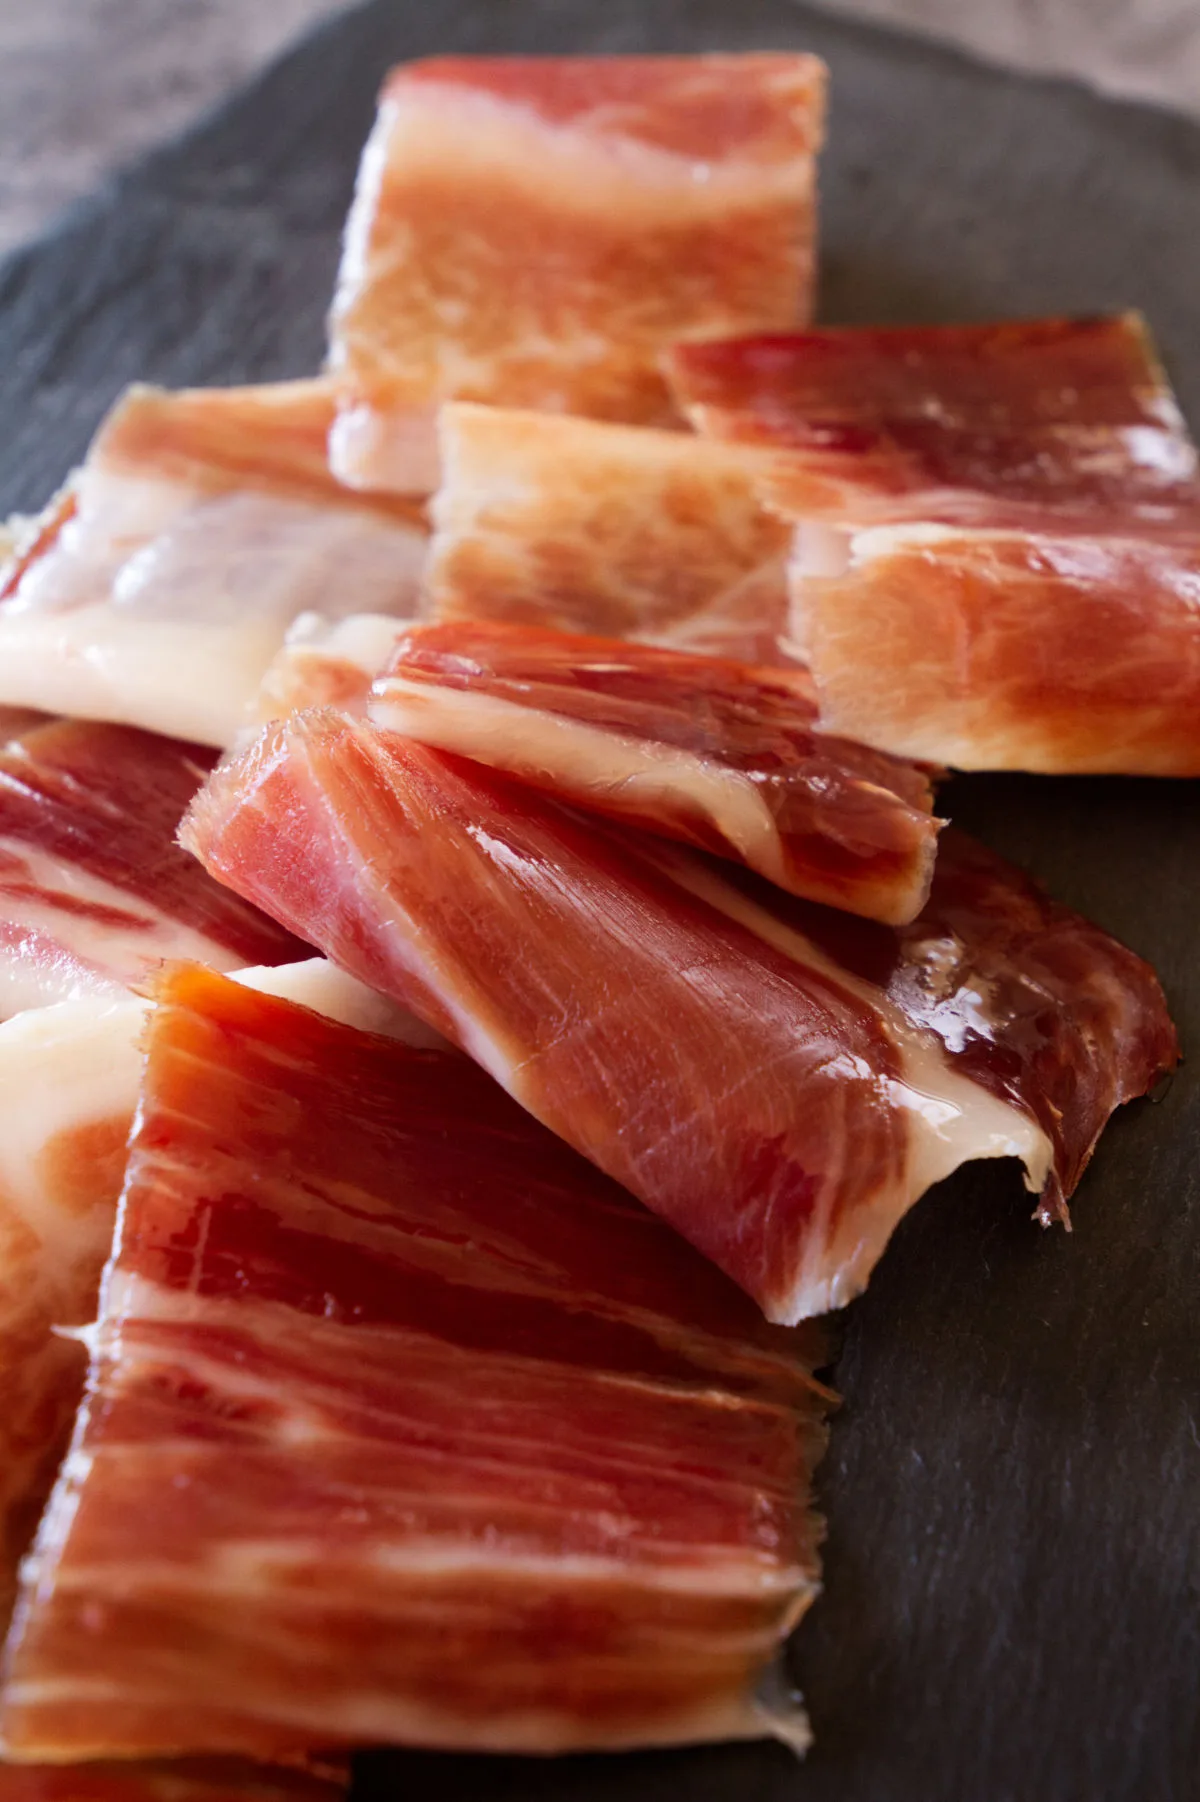 Slices of jamon iberico sit on a slate plate.